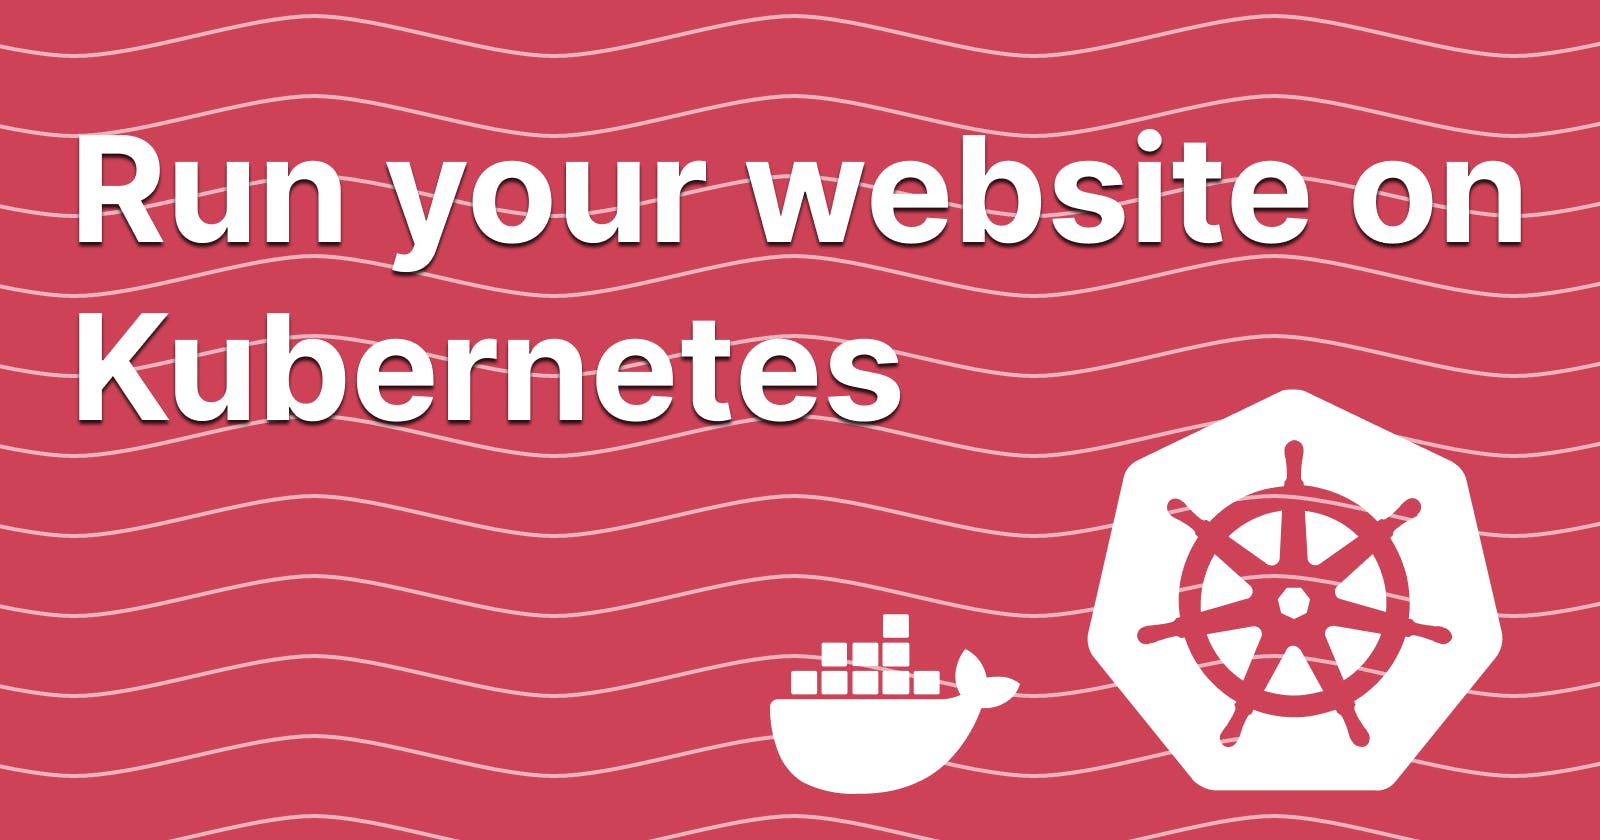 How to run your website on Kubernetes (Minikube)?